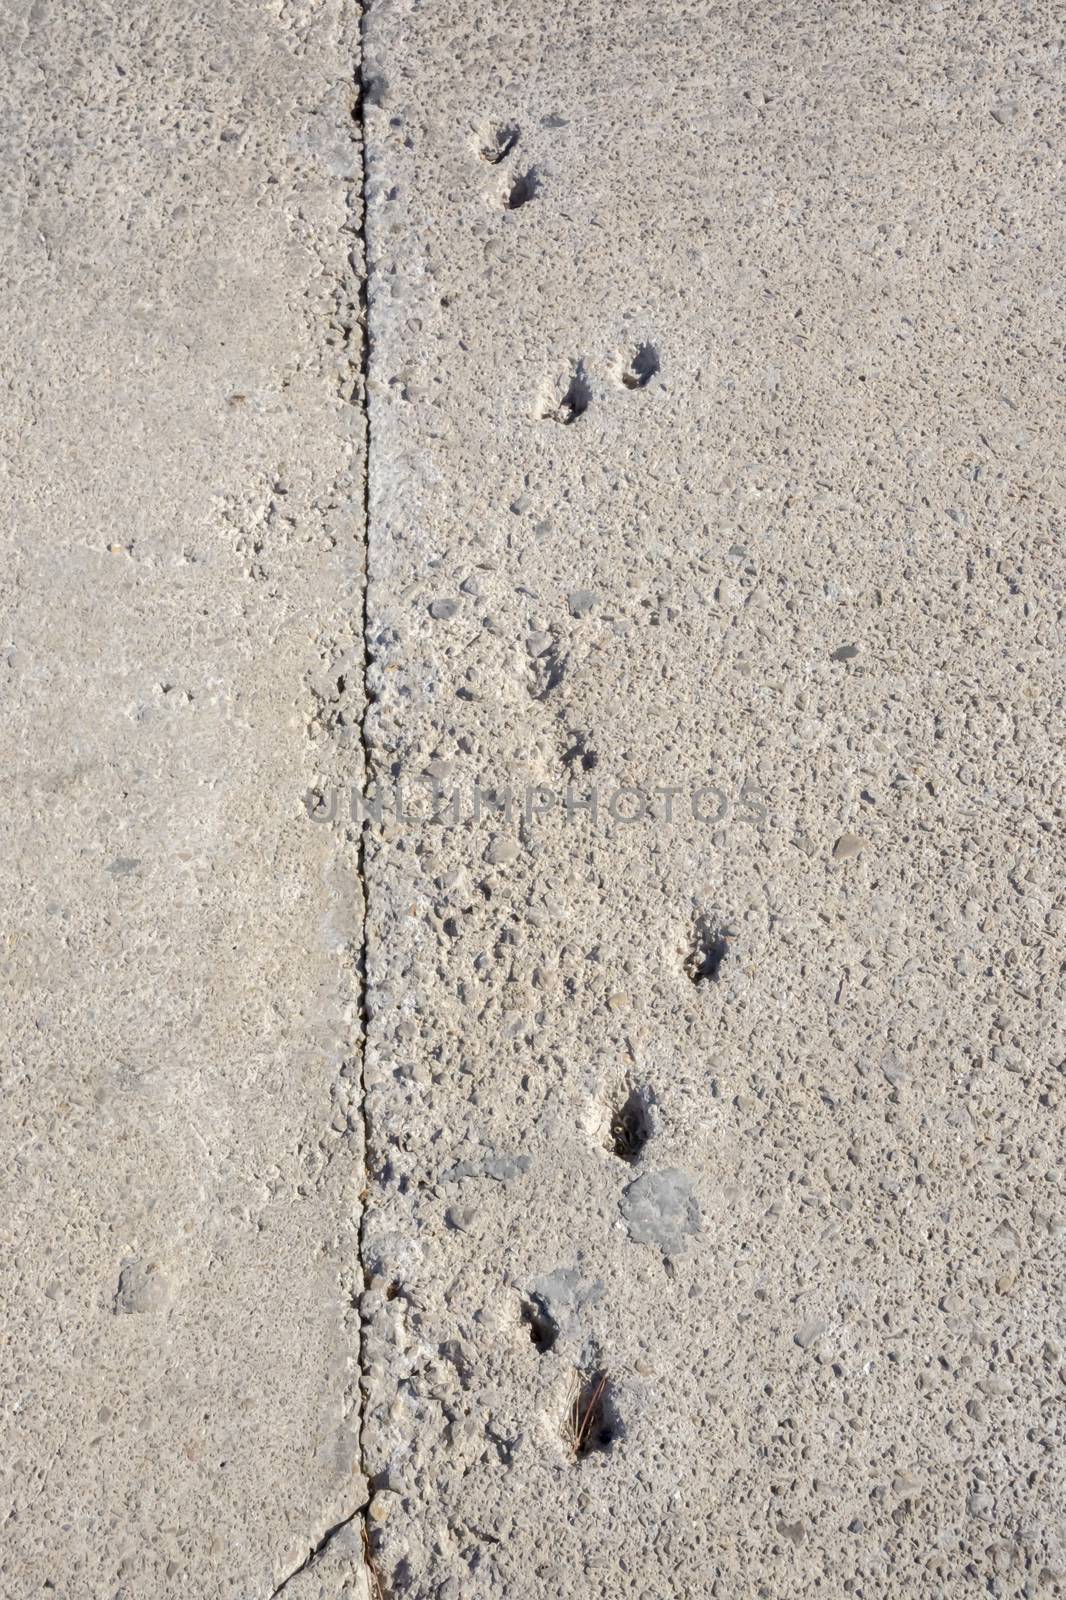 Concrete footprints, probably by a cat, on a sidewalk. Mallorca, Balearic islands, Spain.